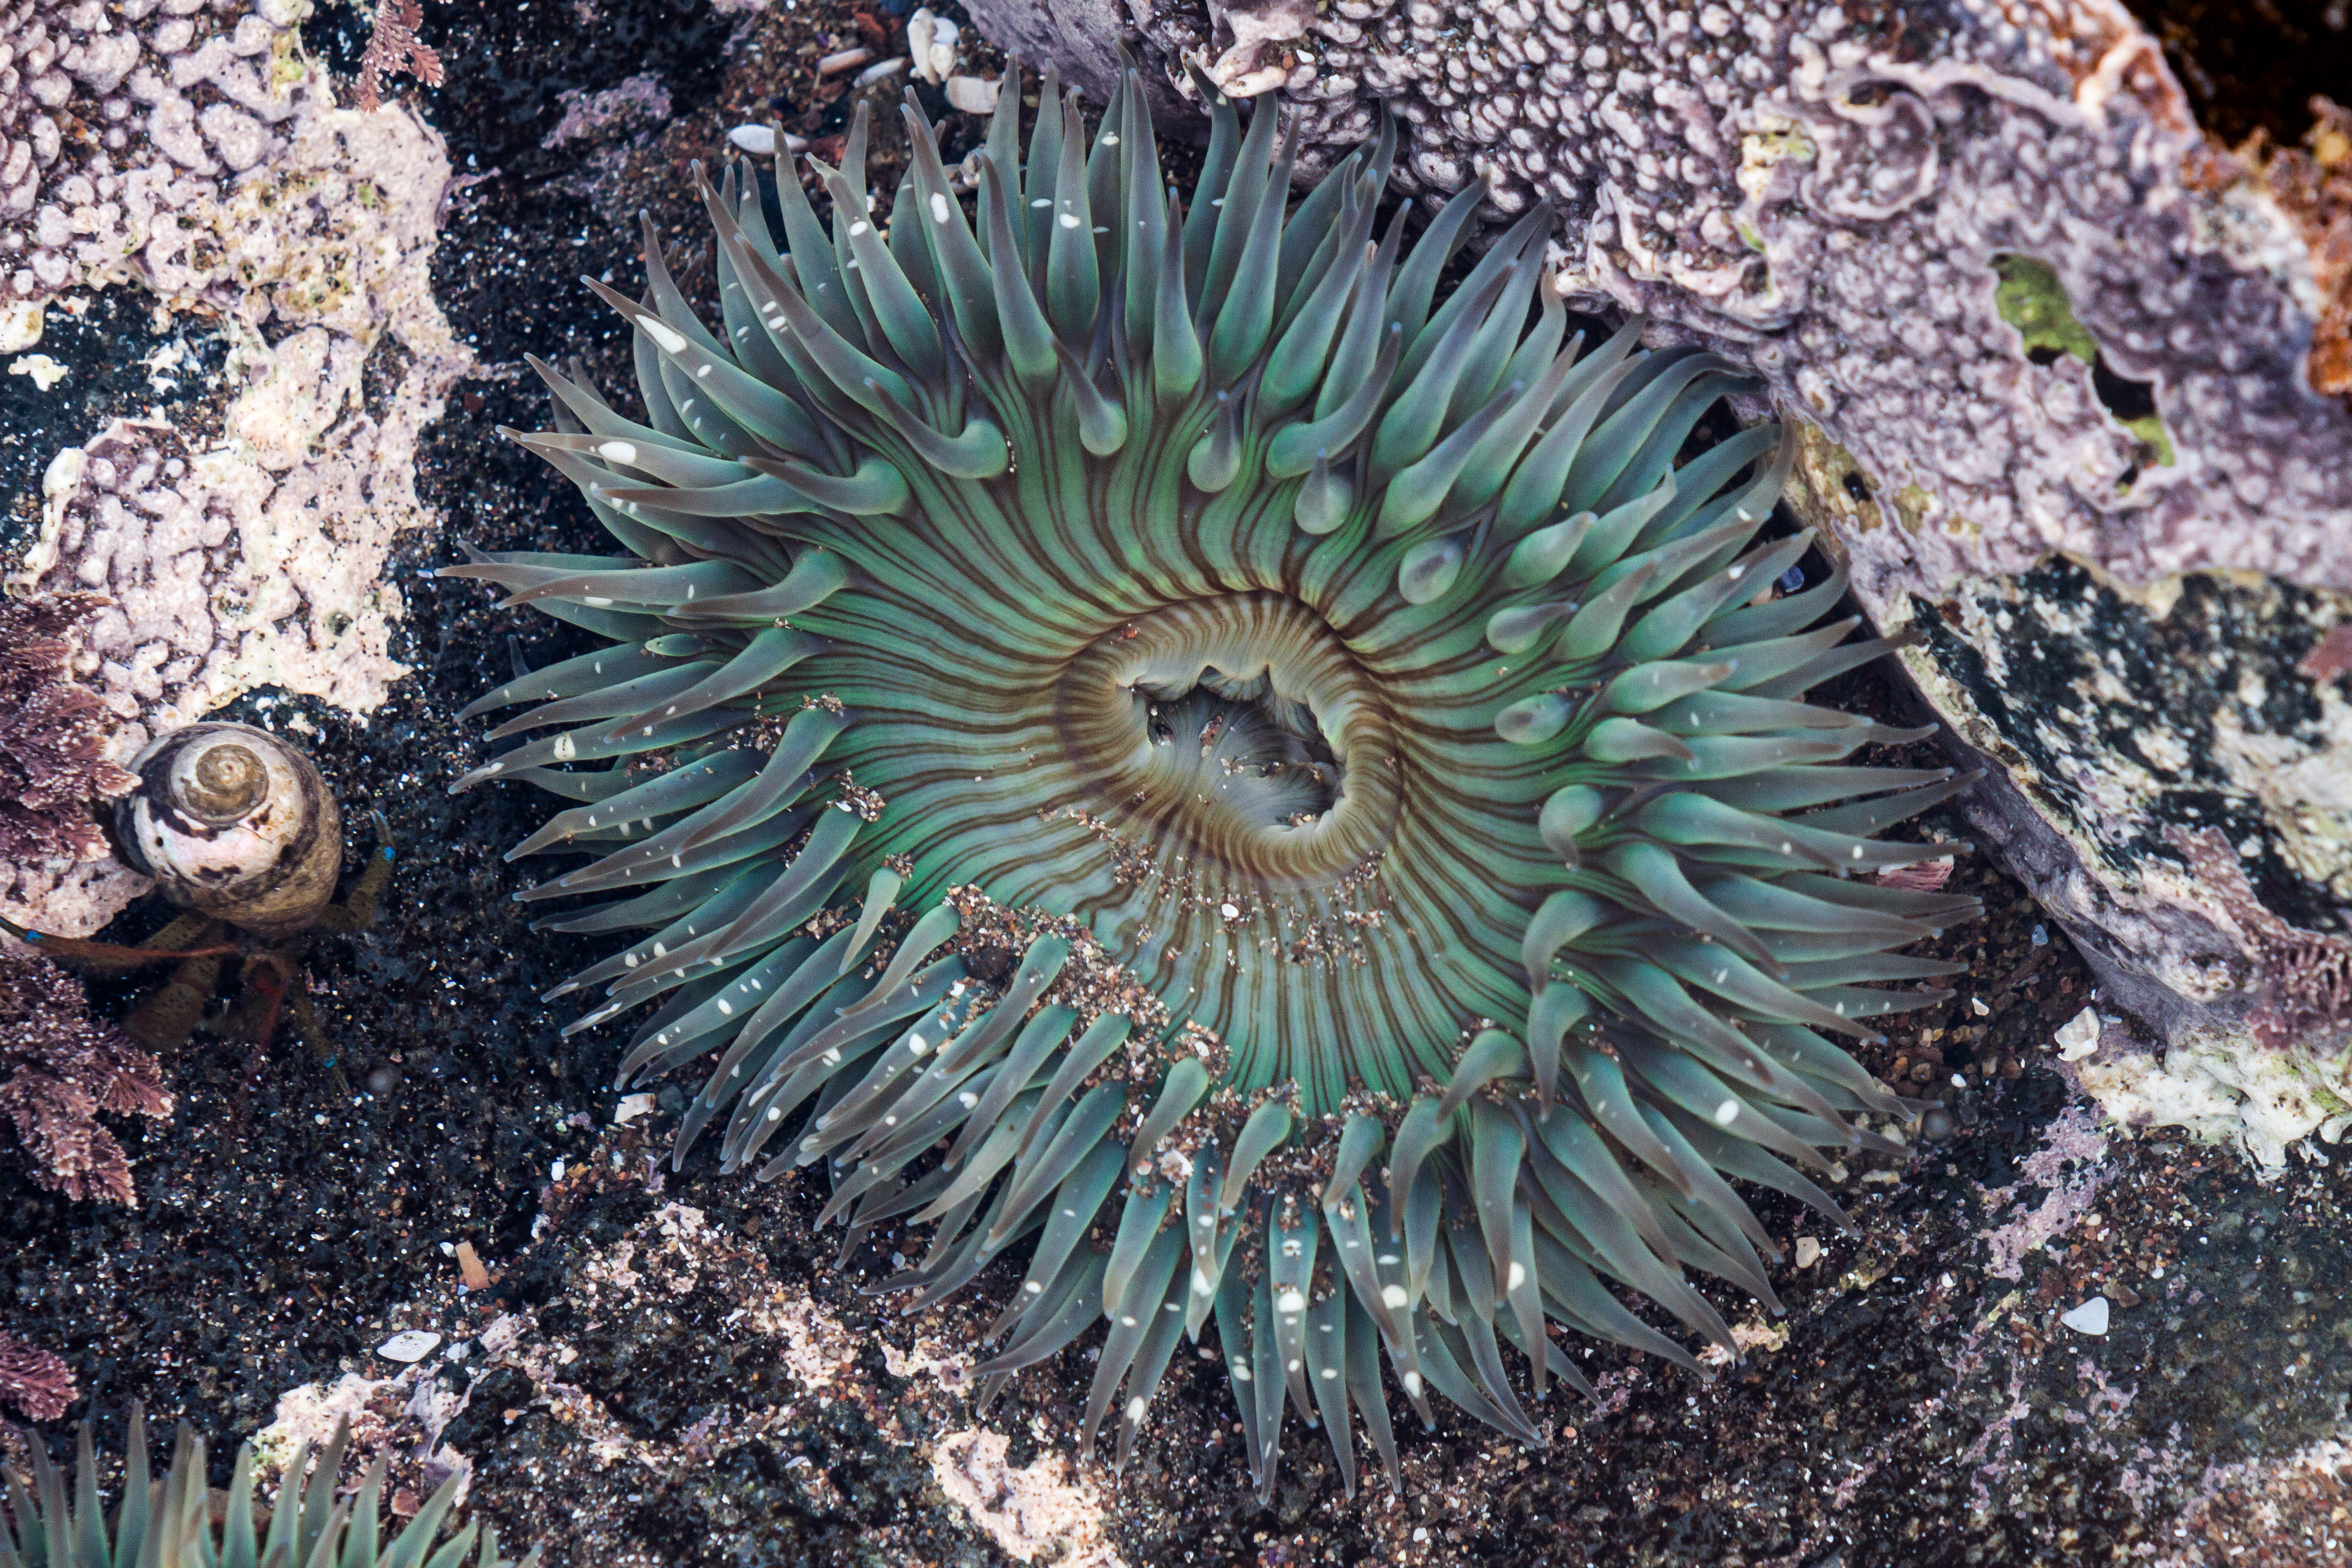 File:Sea anemone baja california.jpg - Wikimedia Commons